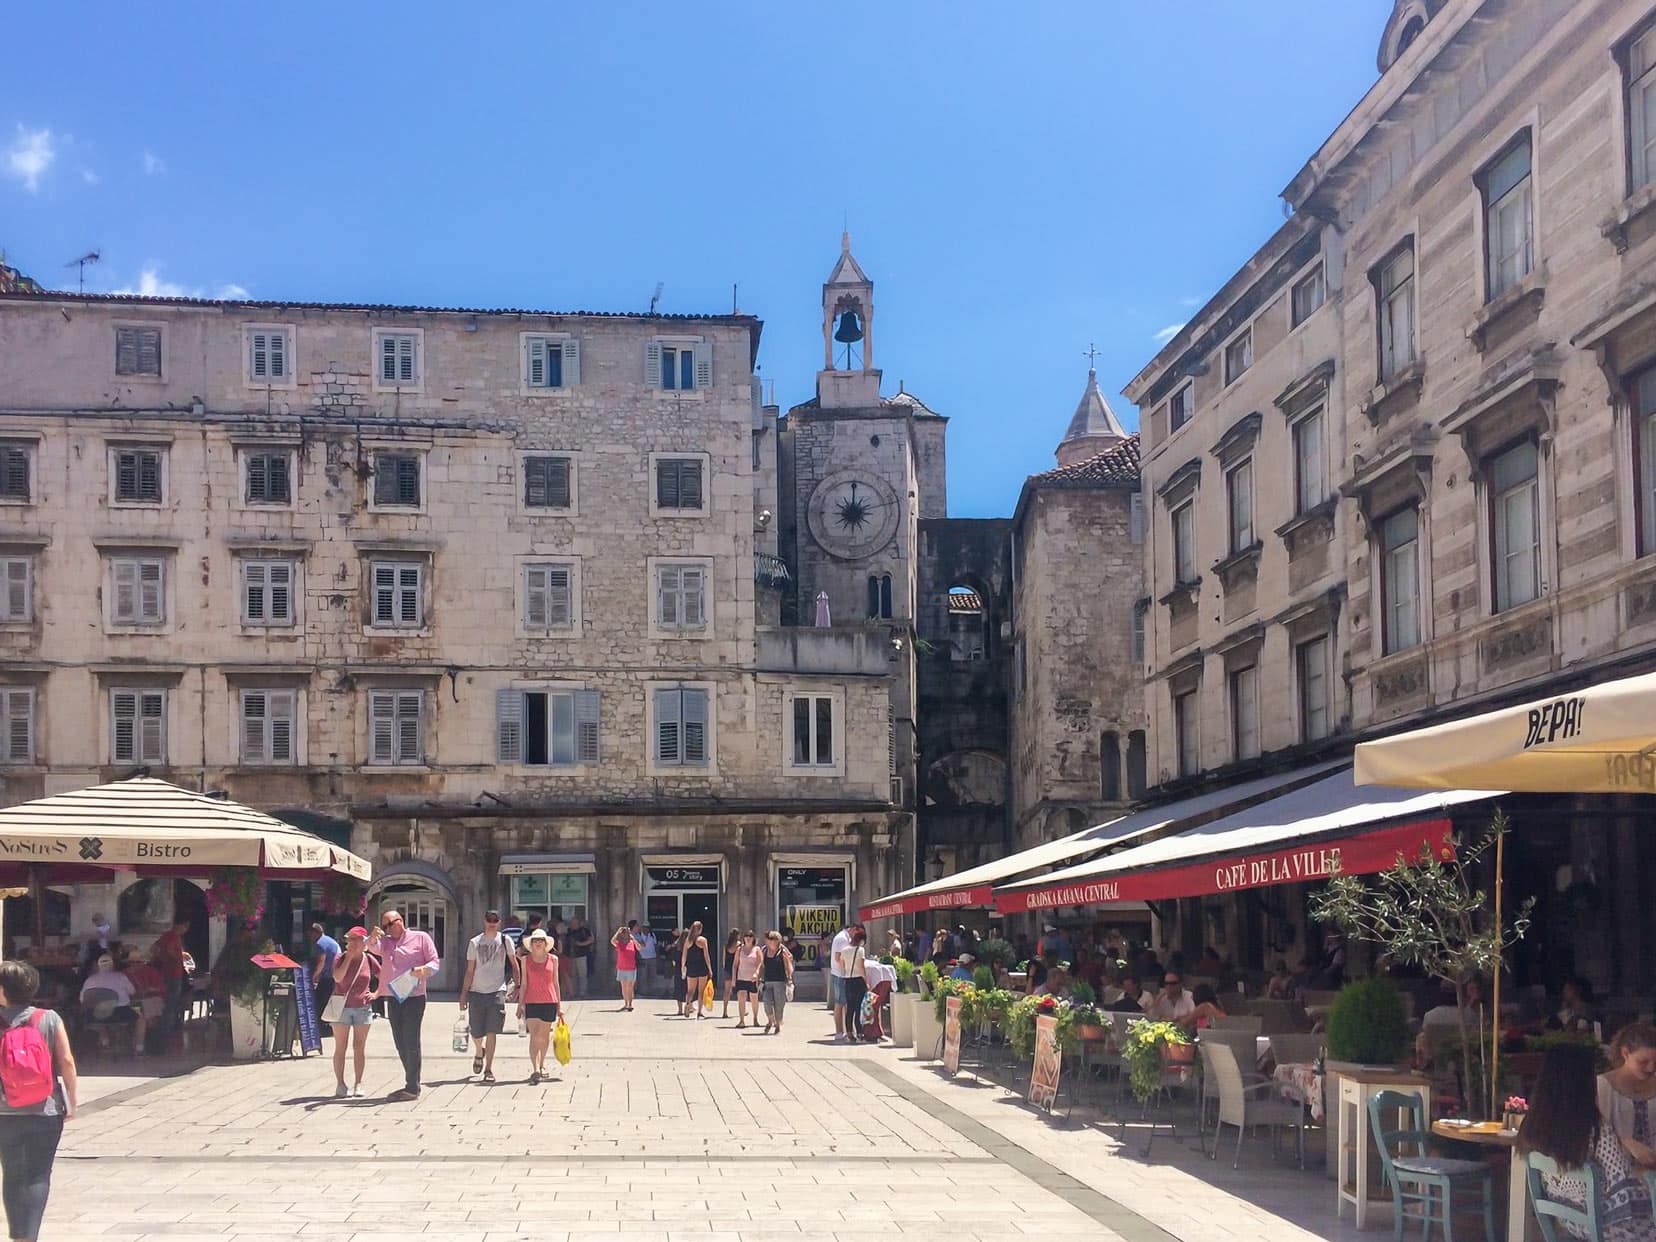 The old town of Split, Croatia